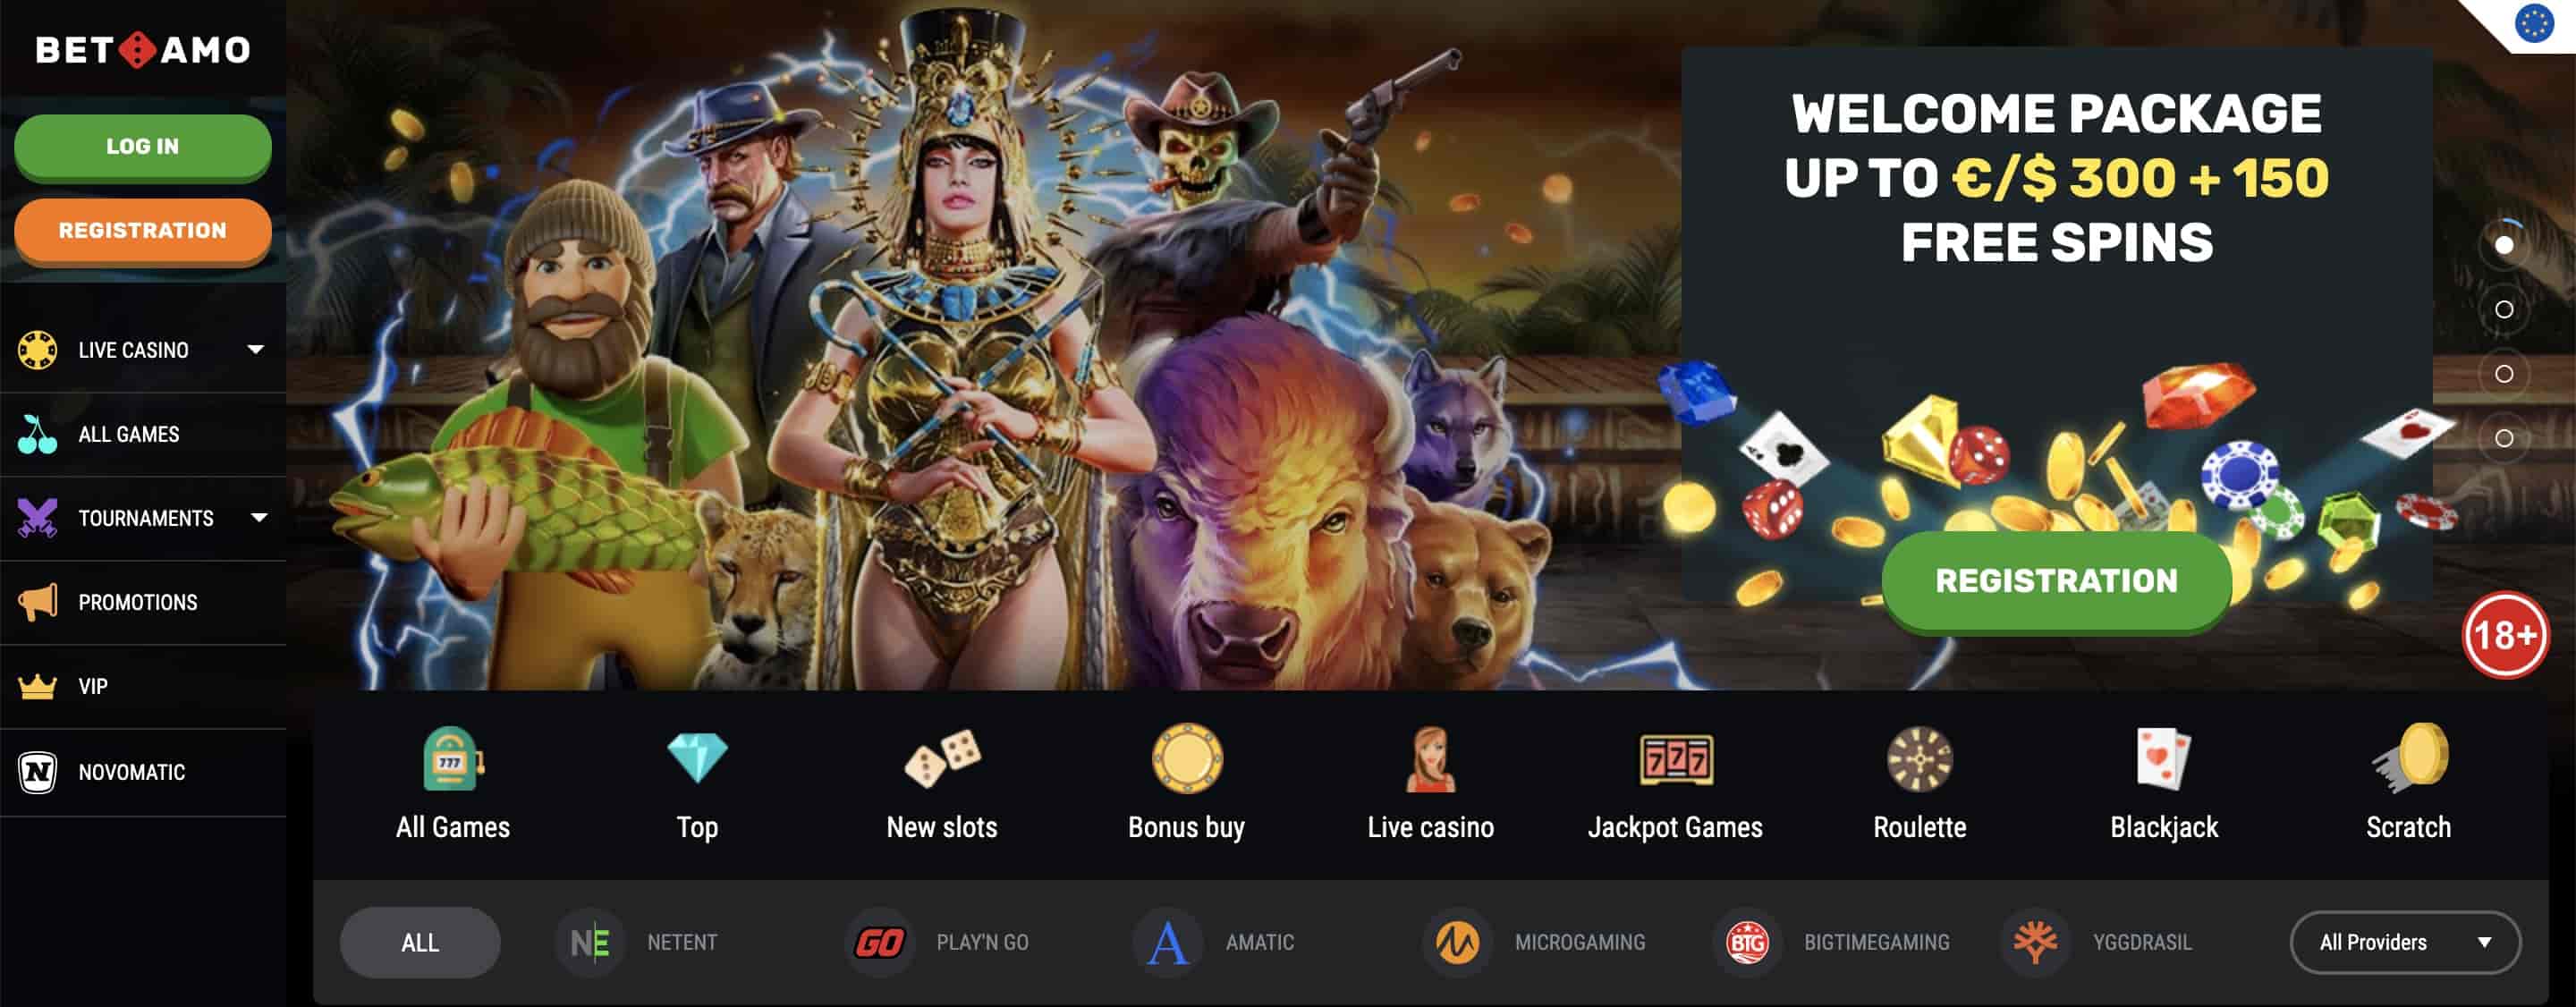 betamo casino homepage